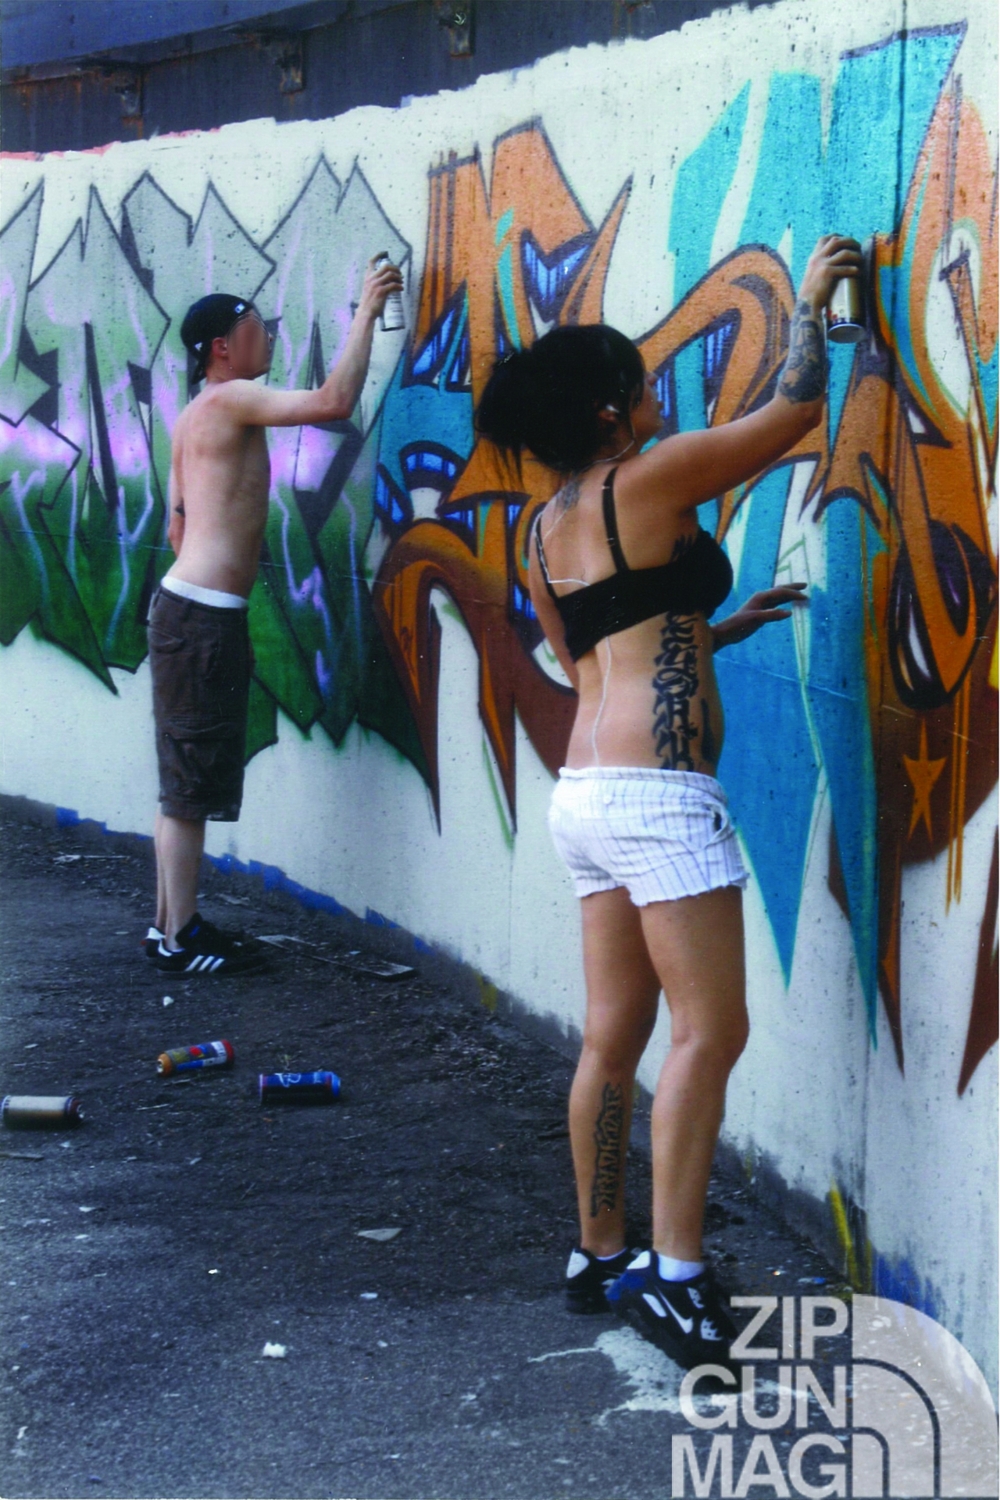 Amazing Spray Paint Artist From New York